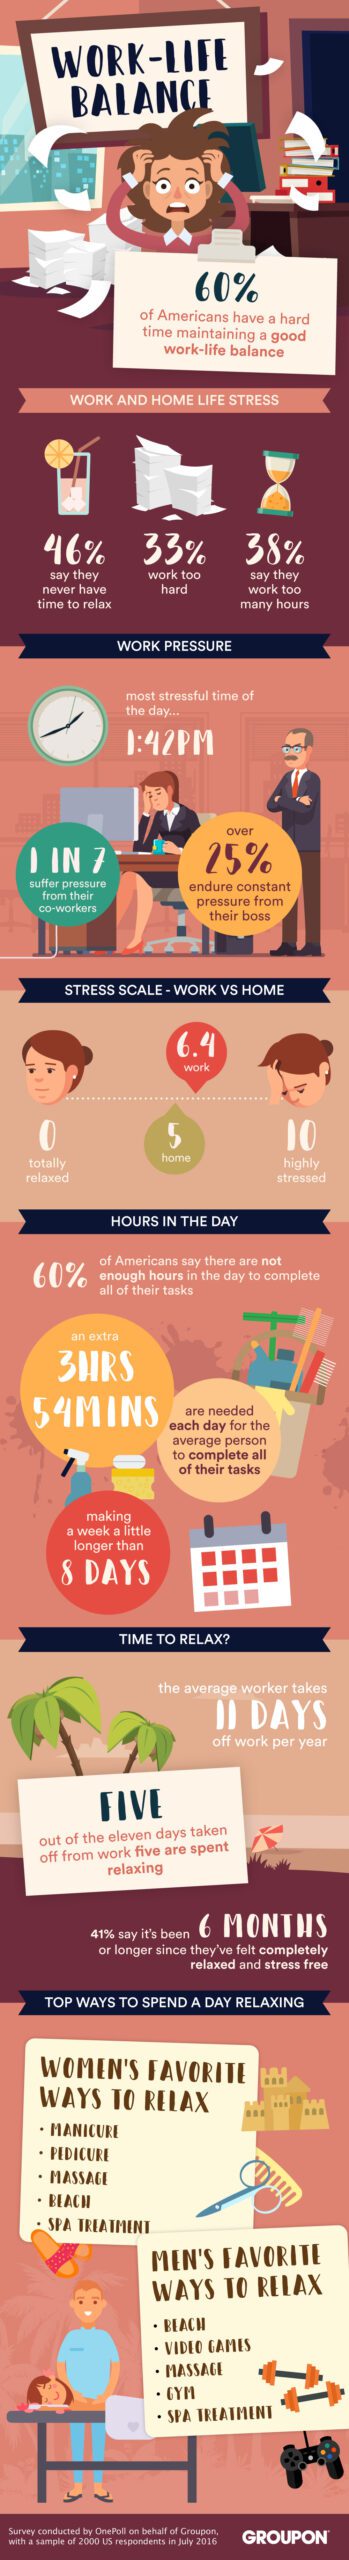 work-life-balance_full_infographic